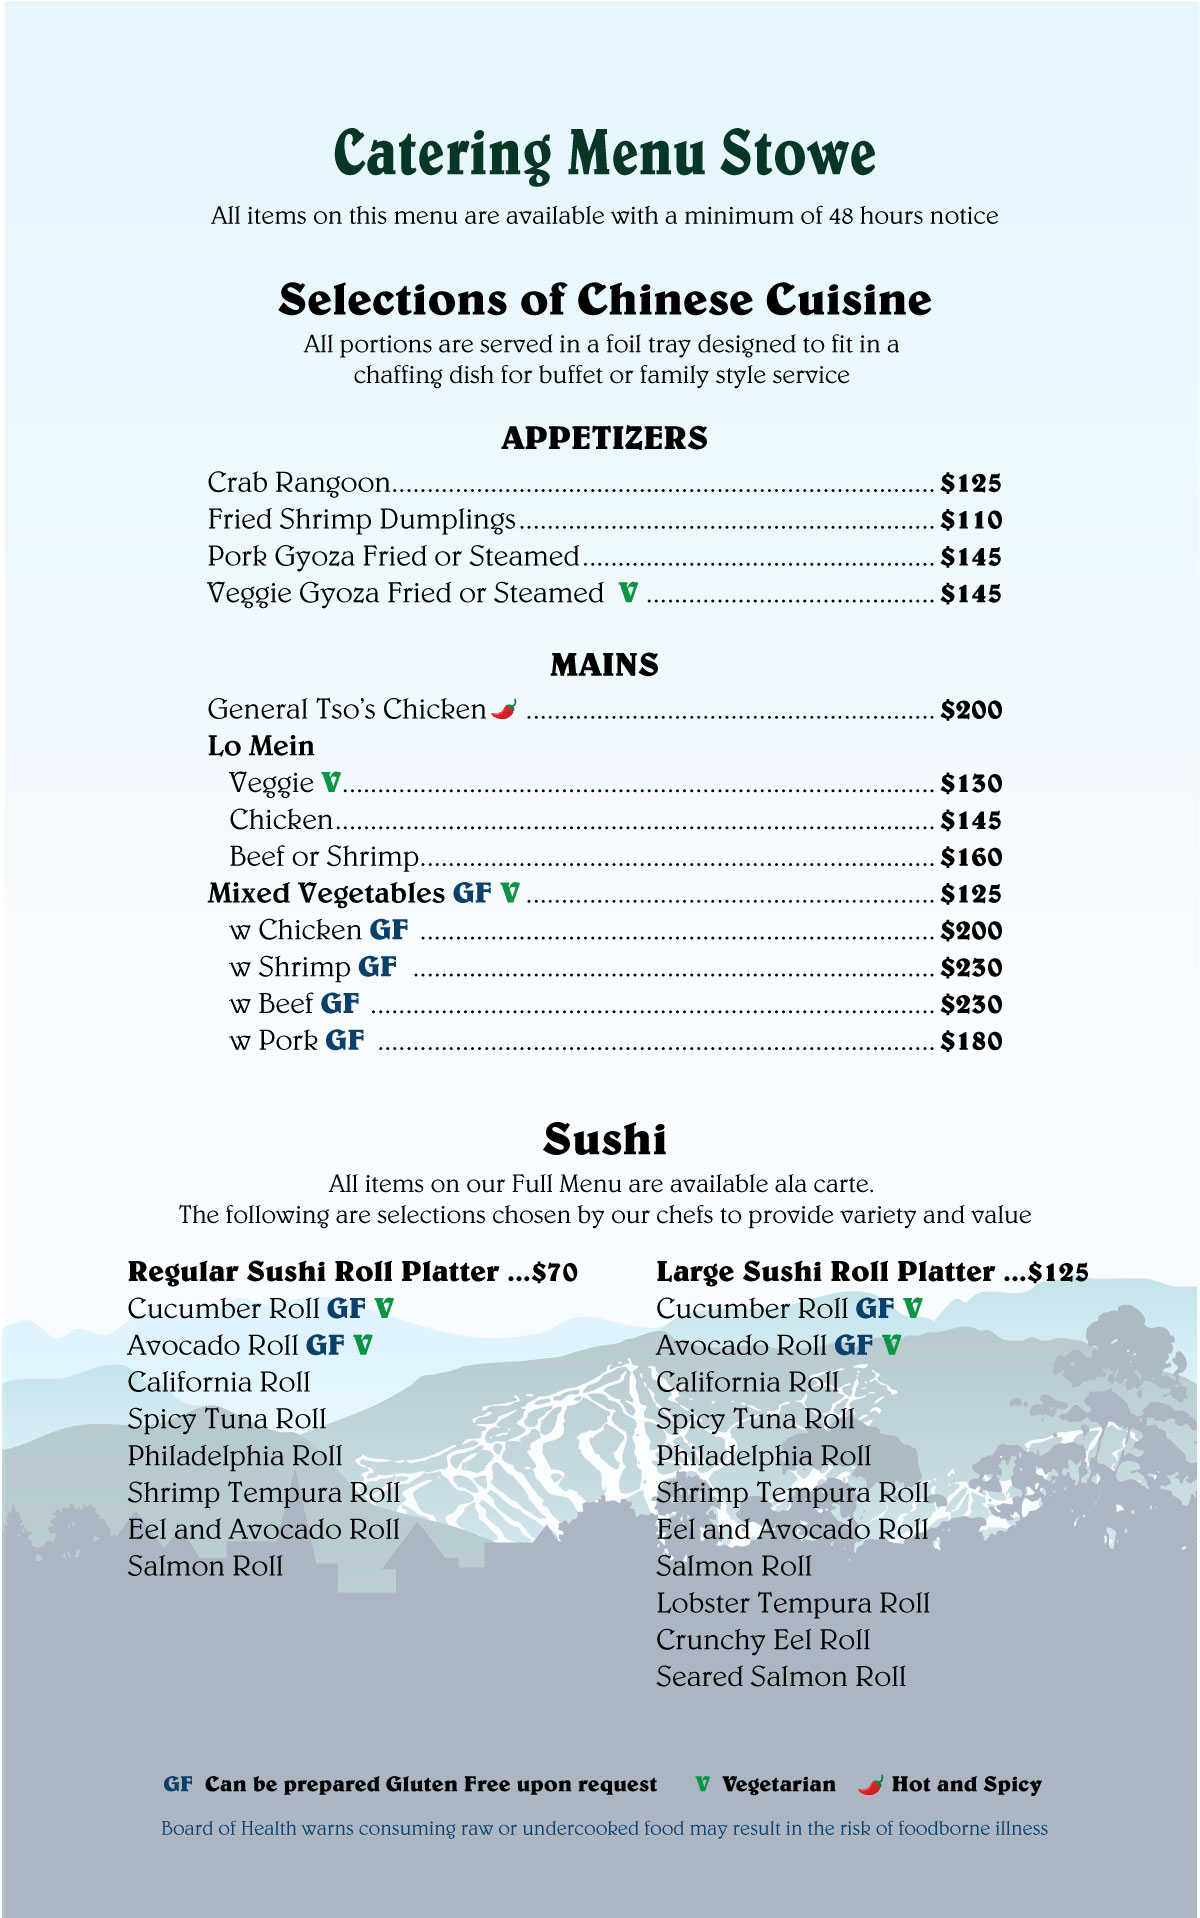 Stowe Catering menu